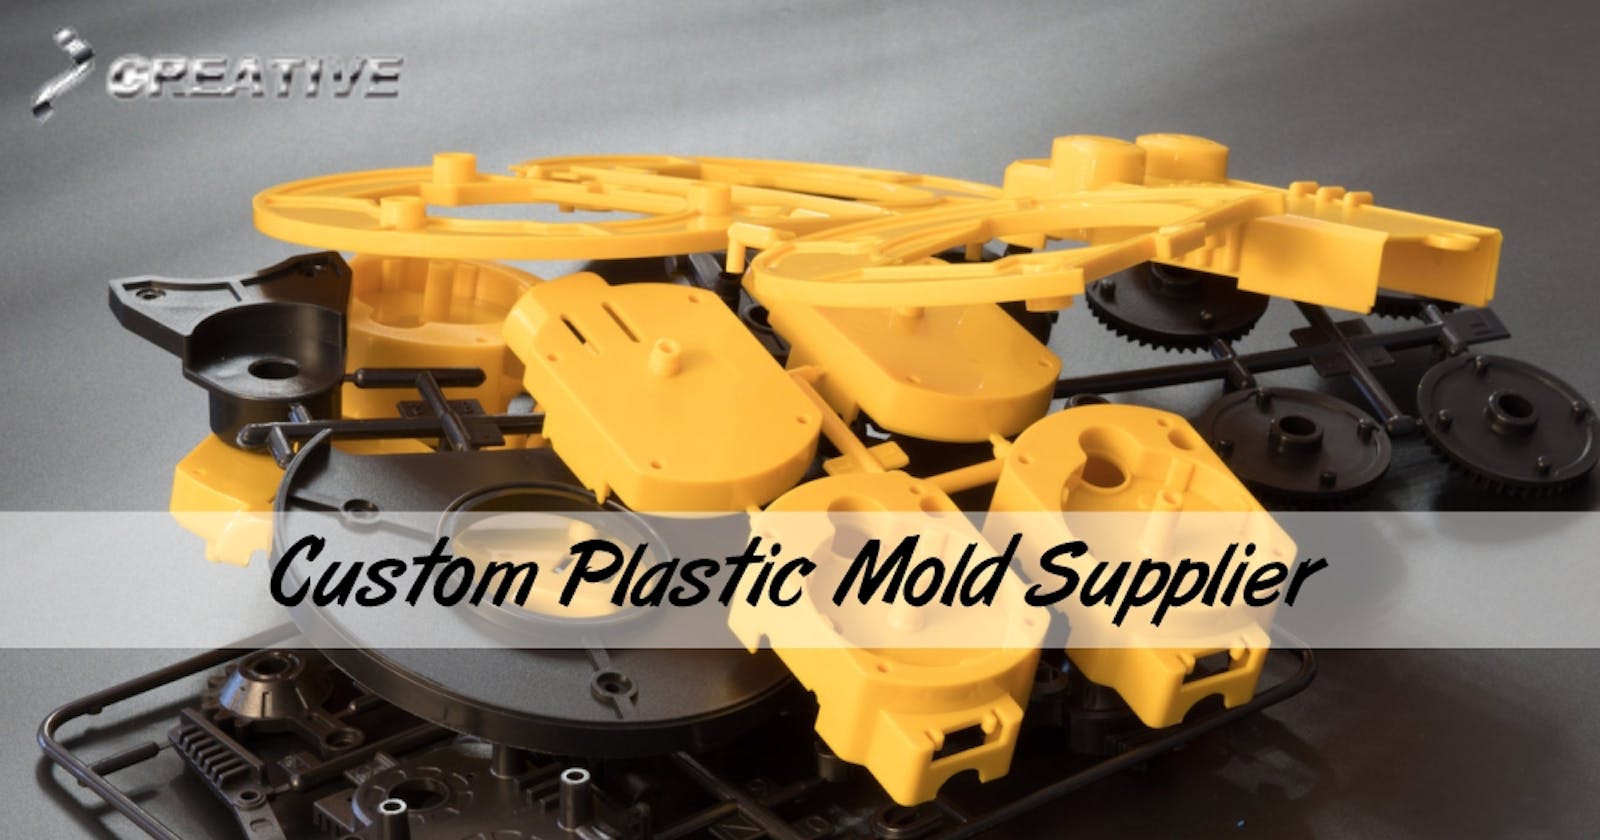 Leading Custom plastic mold supplier in 2023